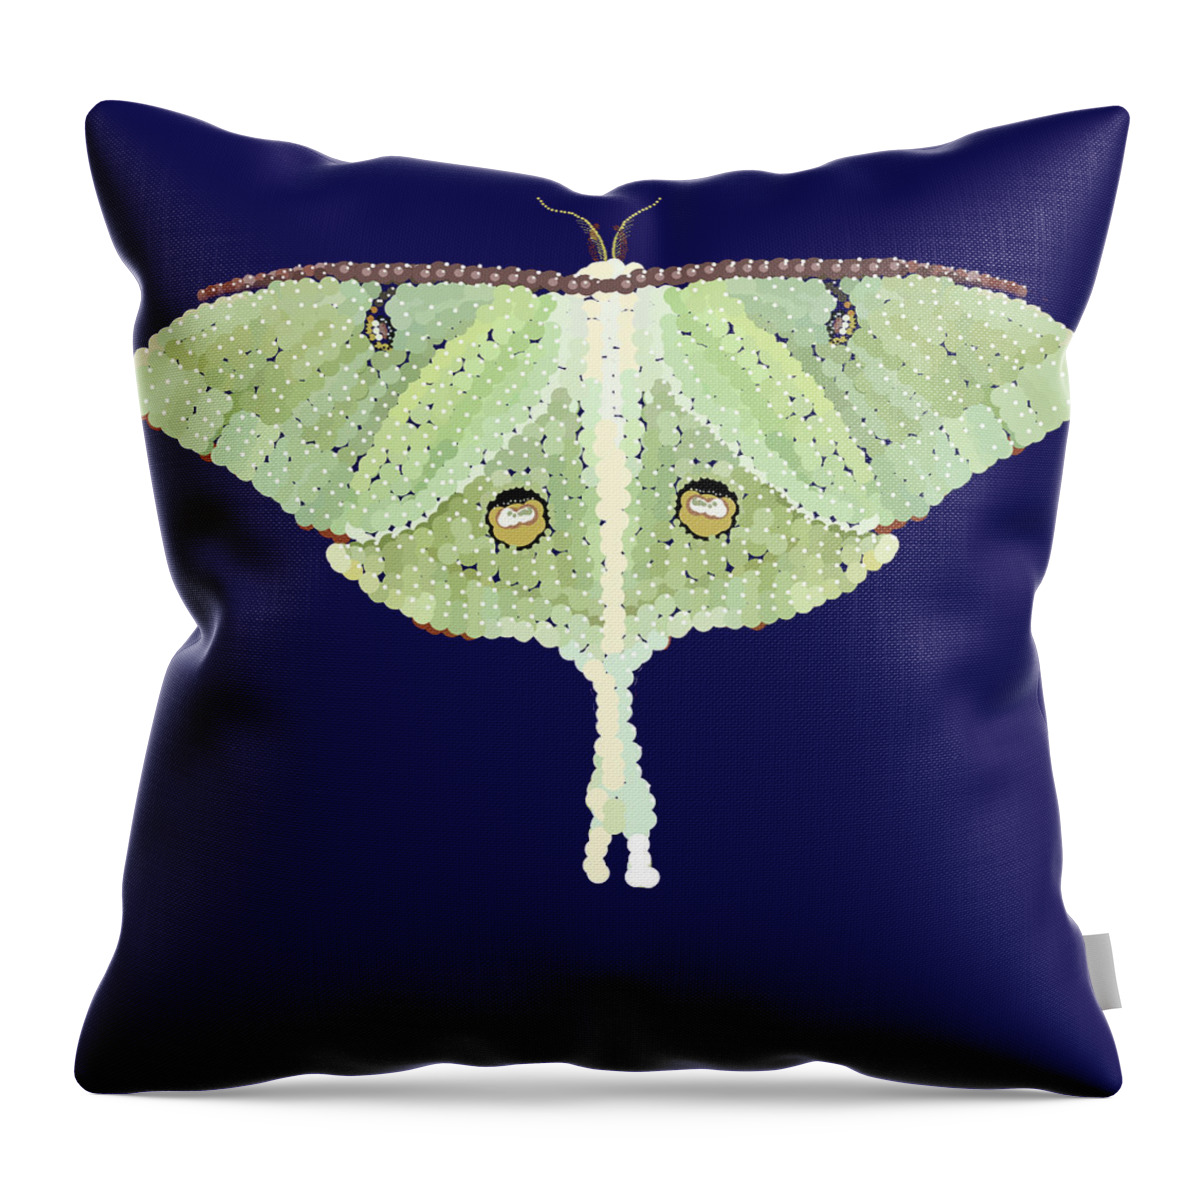  Throw Pillow featuring the digital art Luna Moth Pixel Pointillized by R Allen Swezey